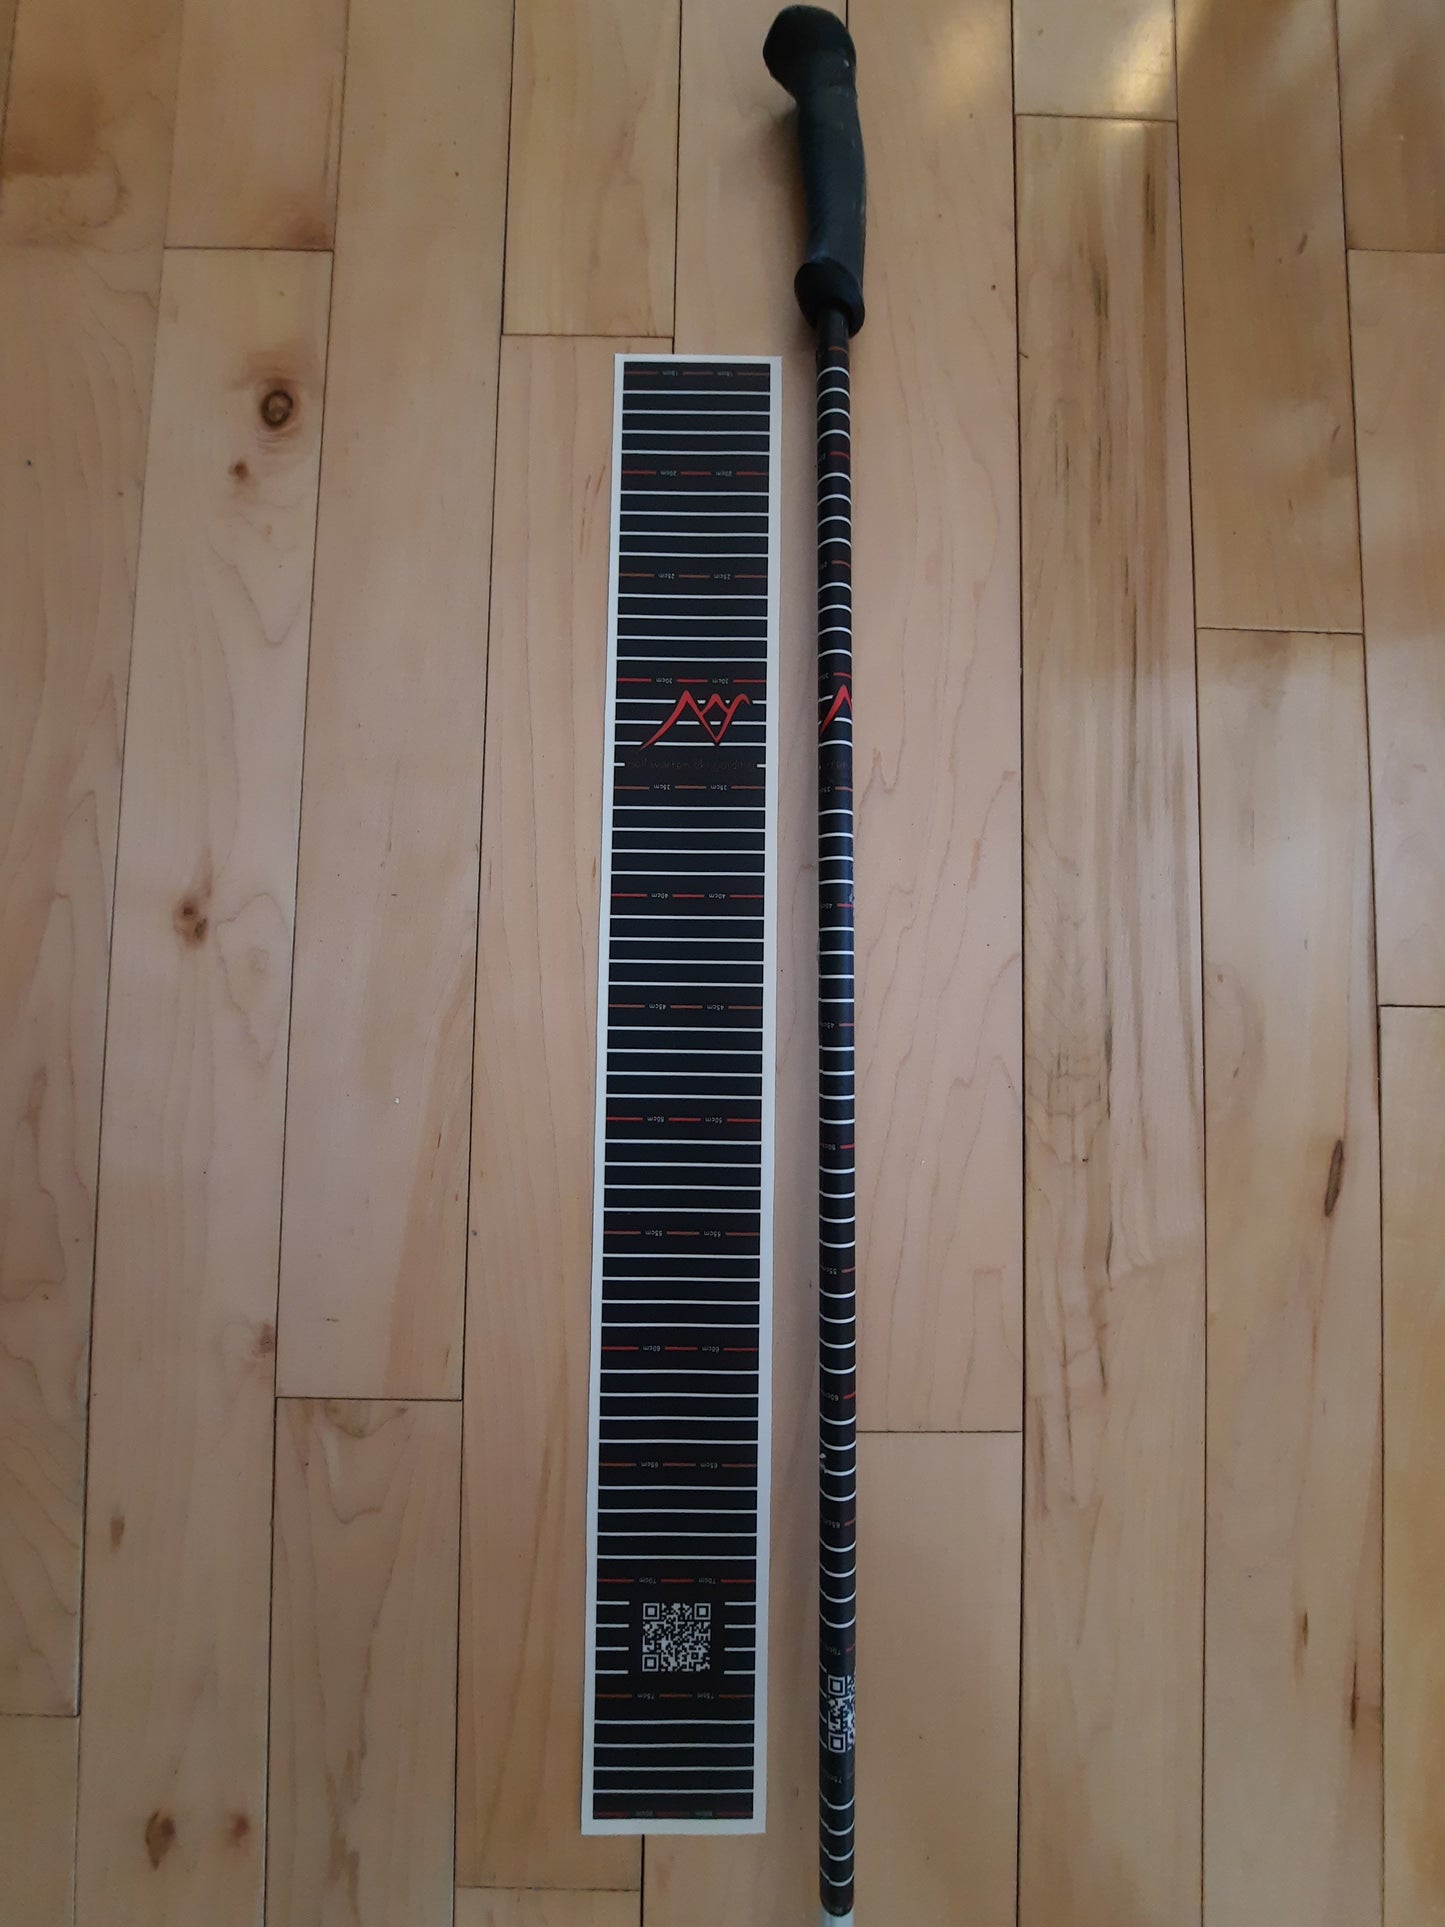 Ski pole ruler sticker